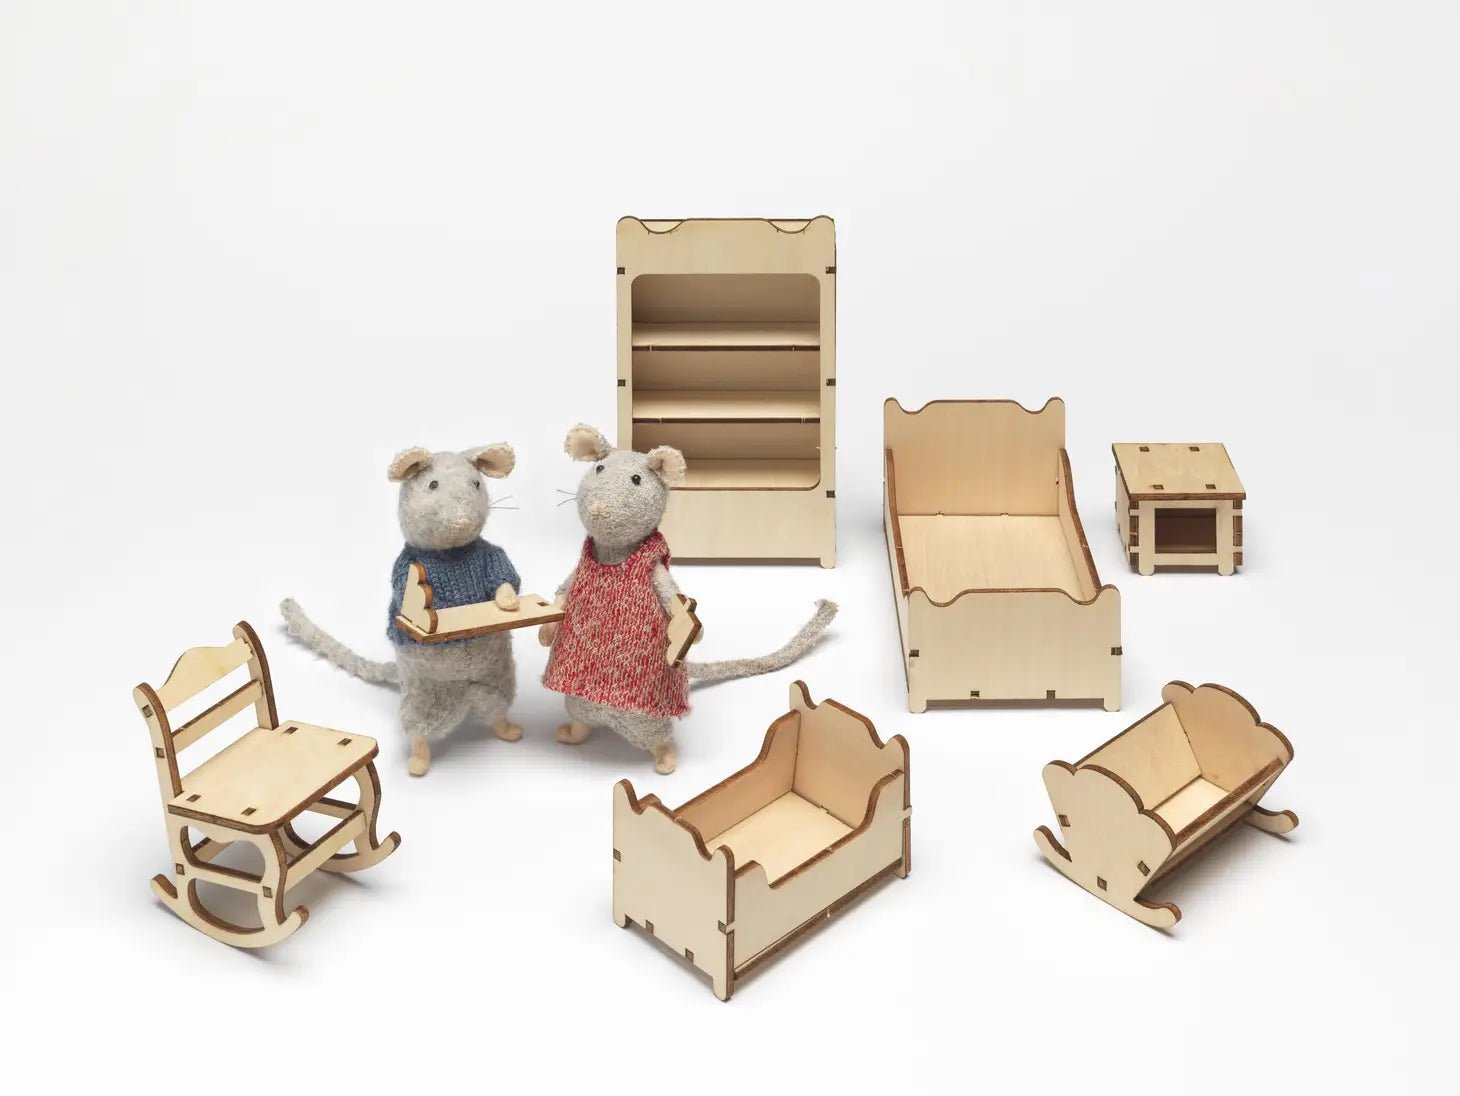 Het Muizenhuis - Kids Diy Dollhouse Furniture Kit - Bedroom (Scale 1:12) - Playlaan